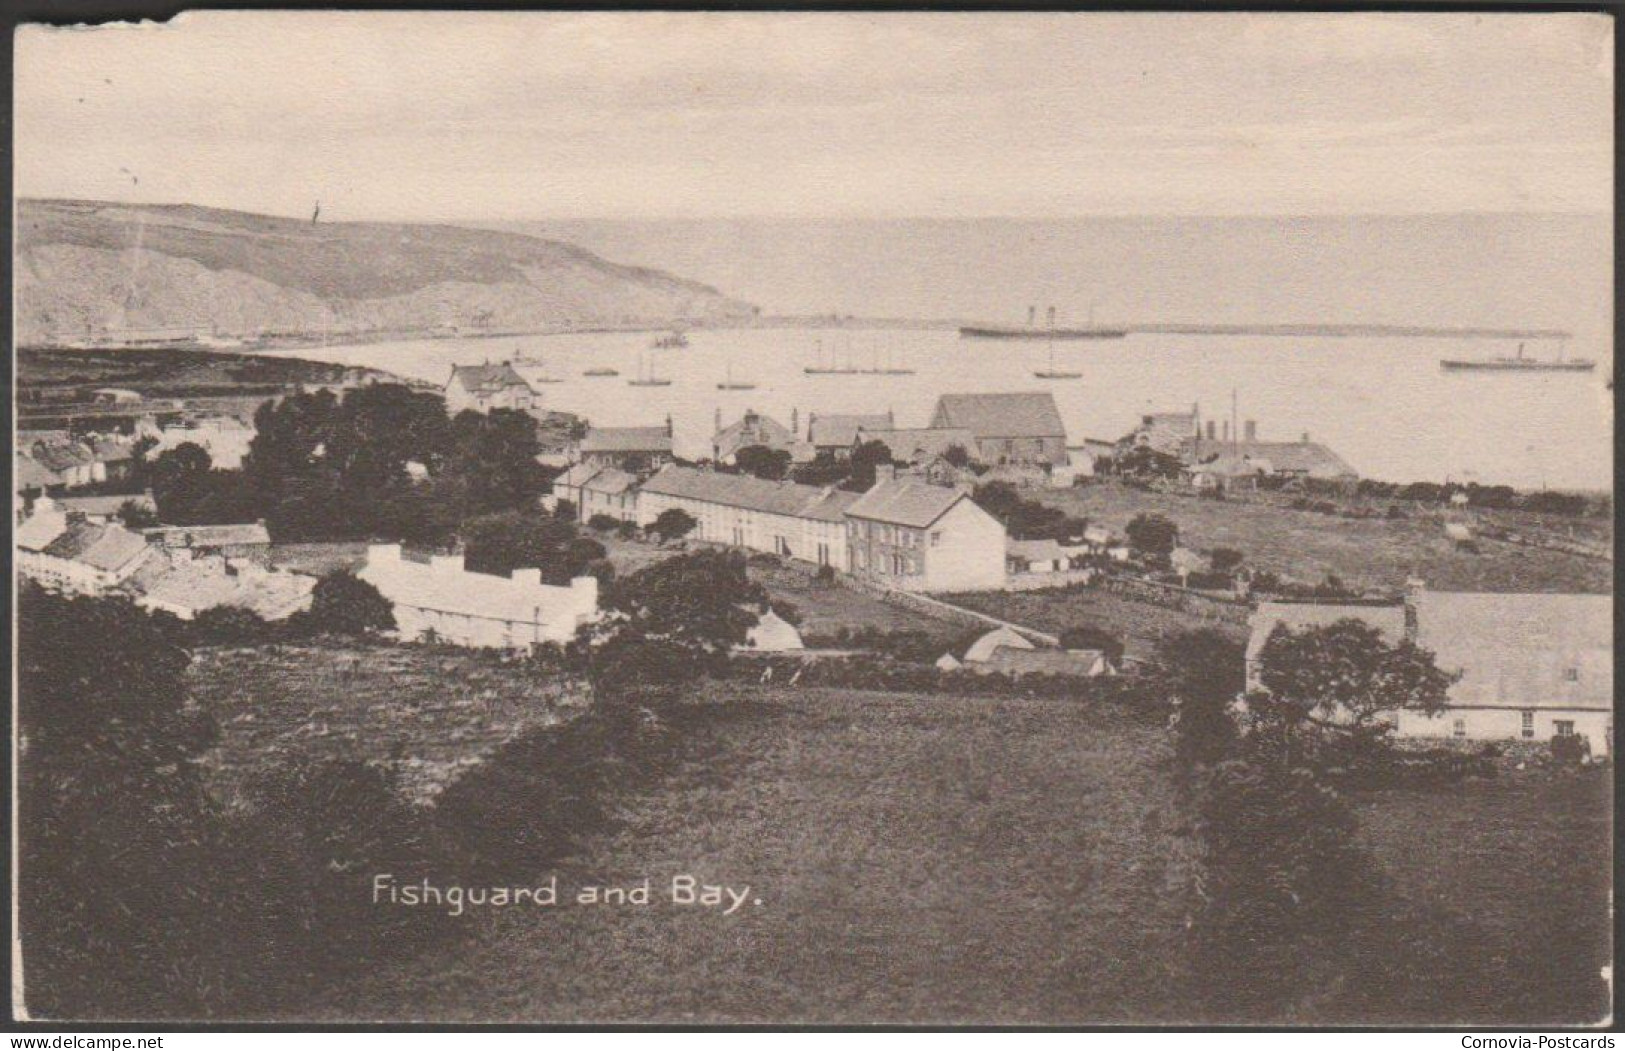 Fishguard and Bay, Pembrokeshire, c.1910s - Postcard